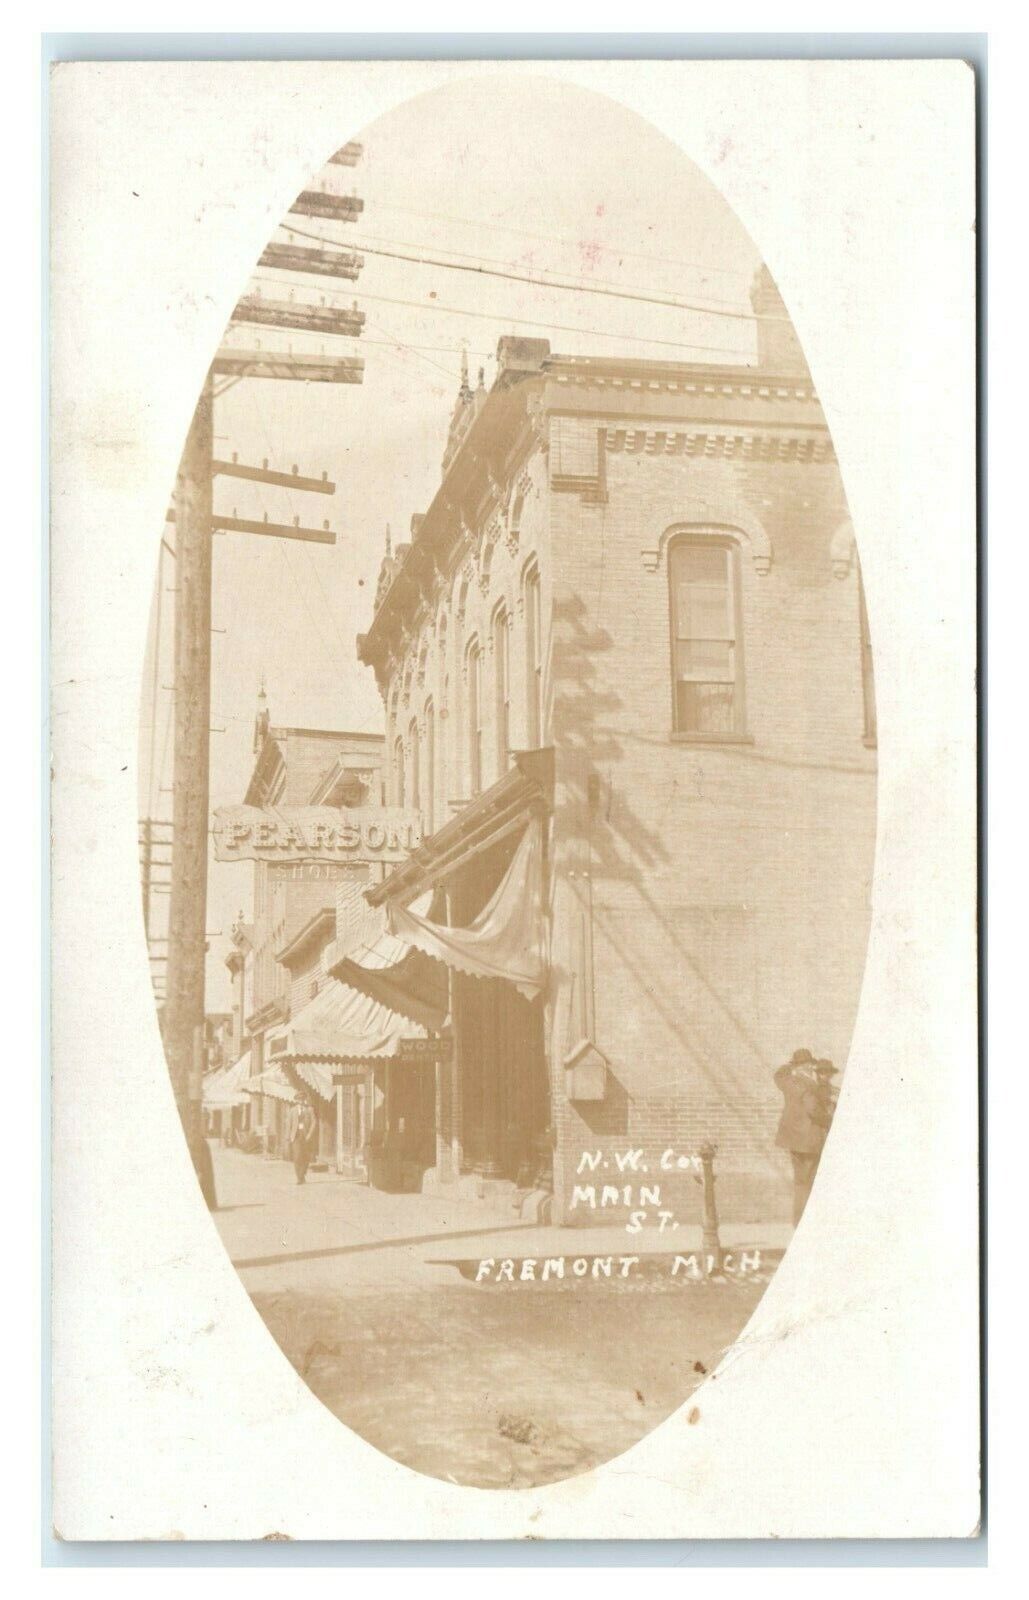 Postcard NW Corner Main St, Fremont Michigan pearson shoes dentist 1909 RPPC L49